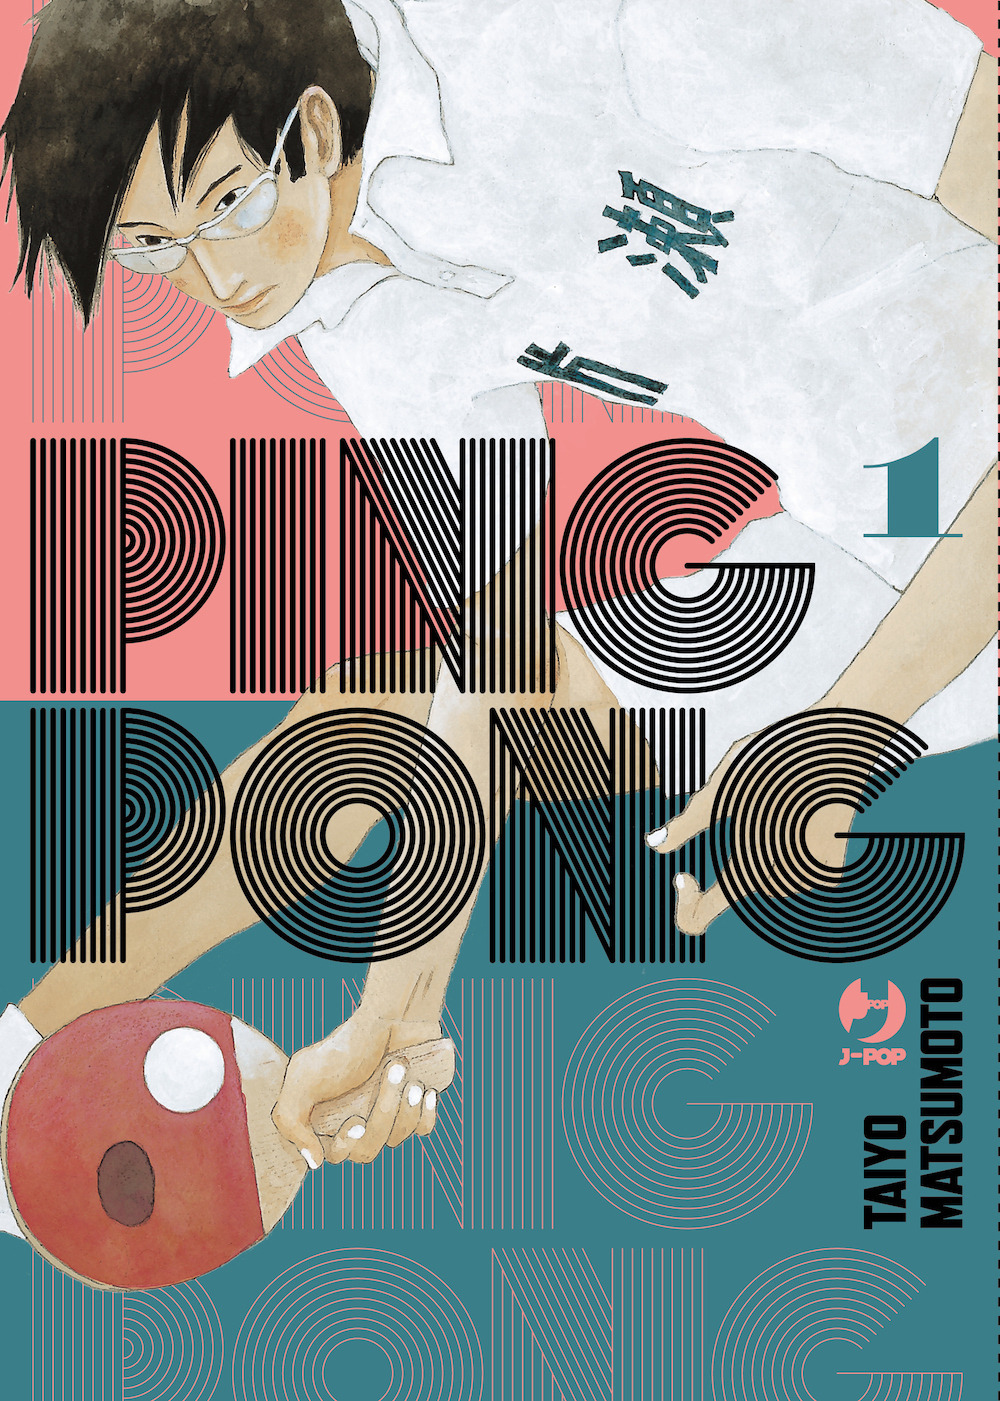 Ping Pong vol. 1 (Italiano language, Edizioni BD)